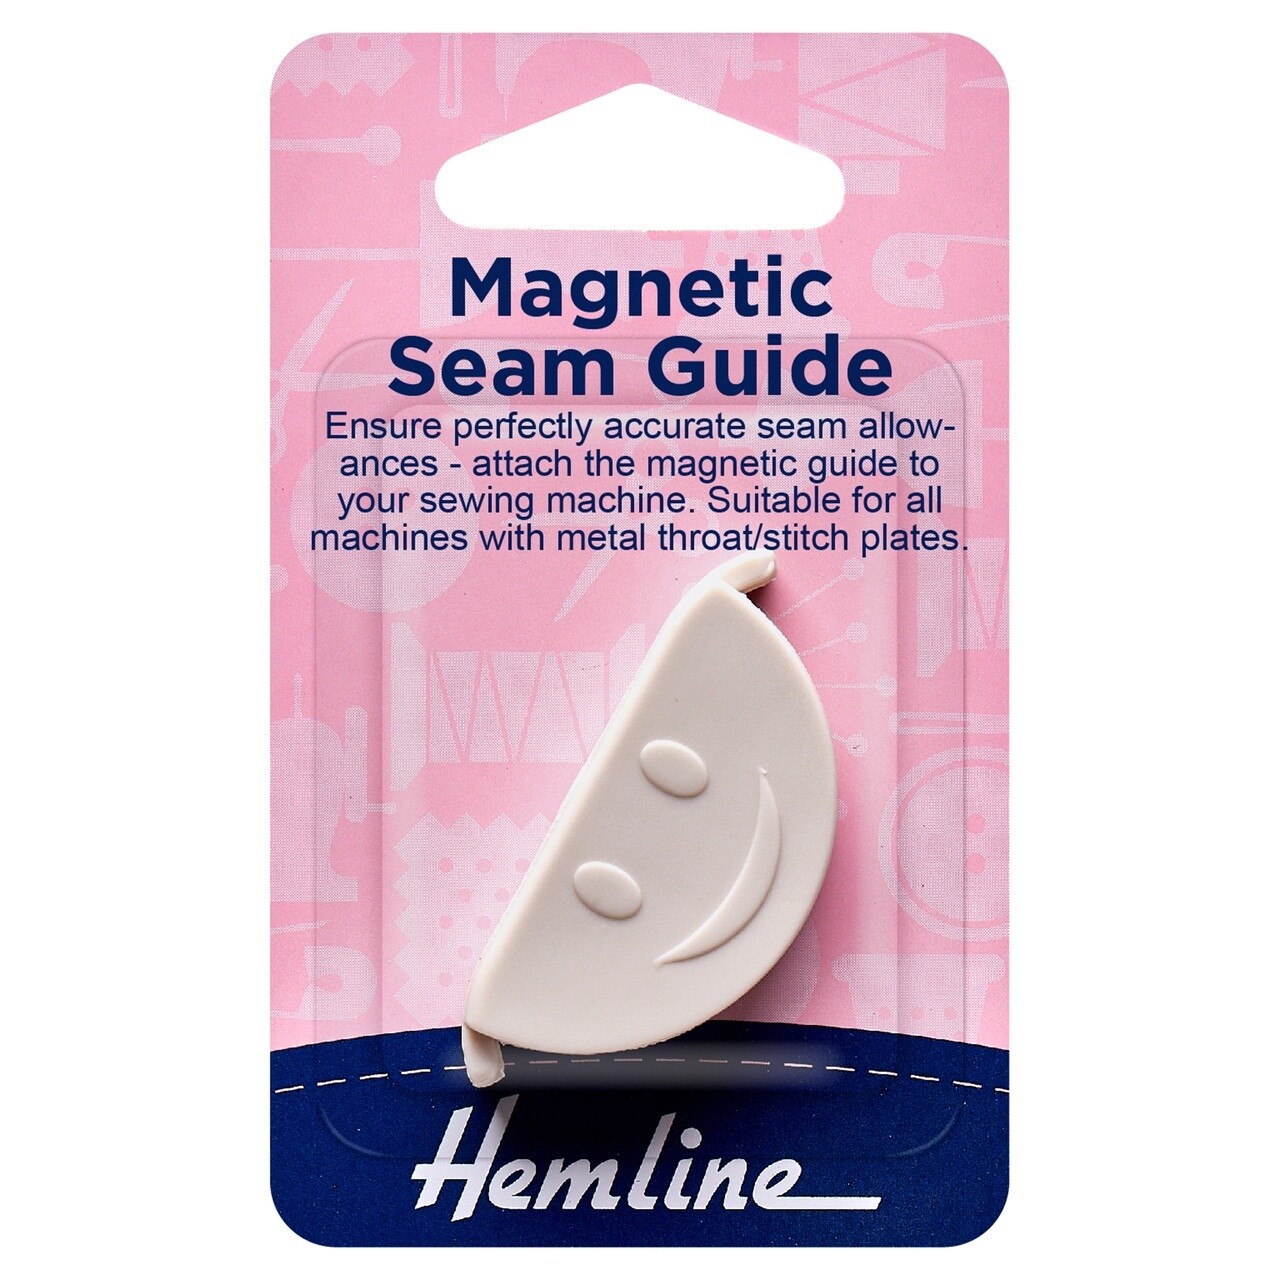 Magnetic Seam Guide: Hemline